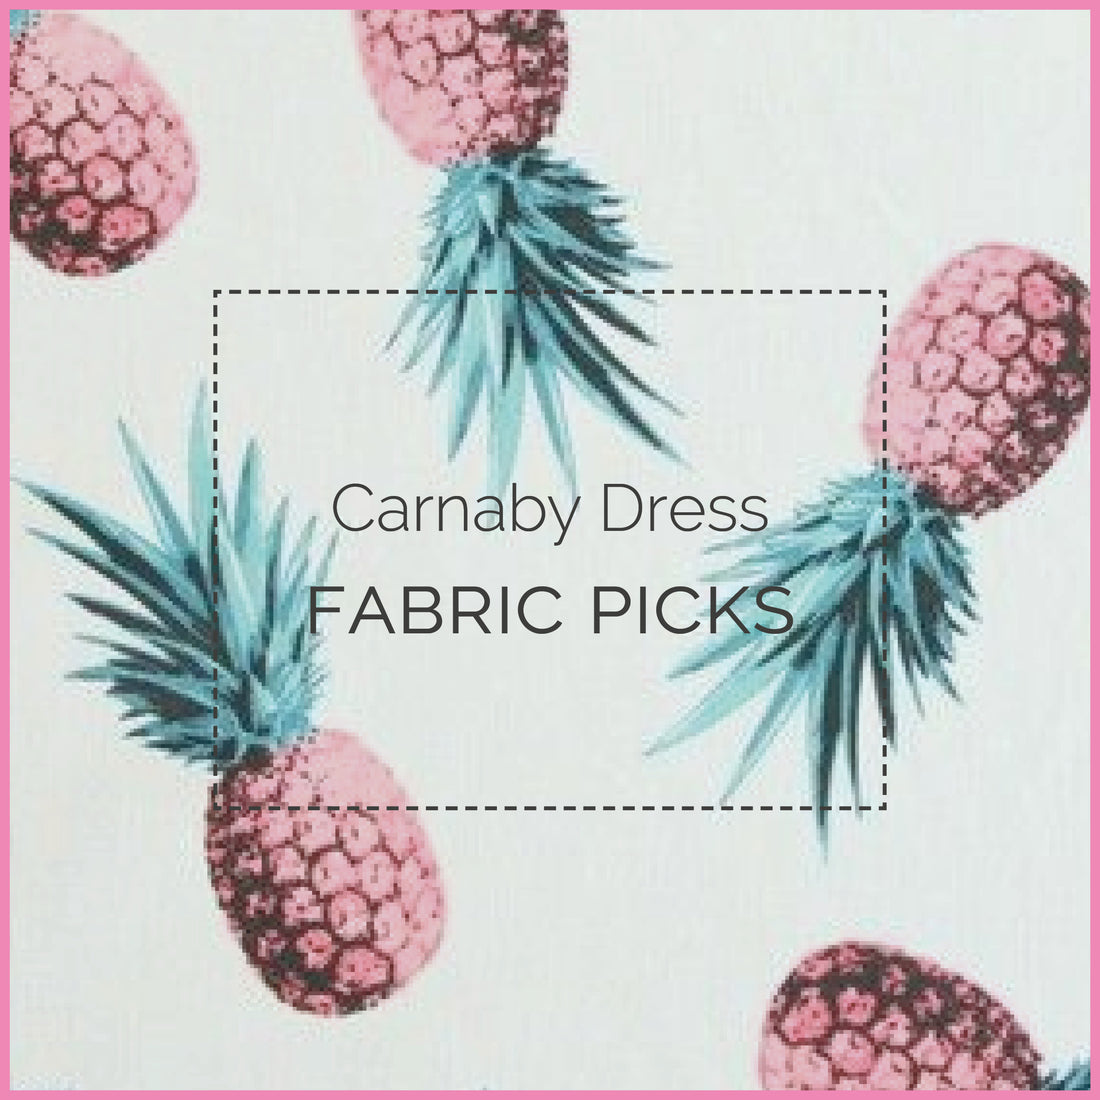 Carnaby Dress fabric picks